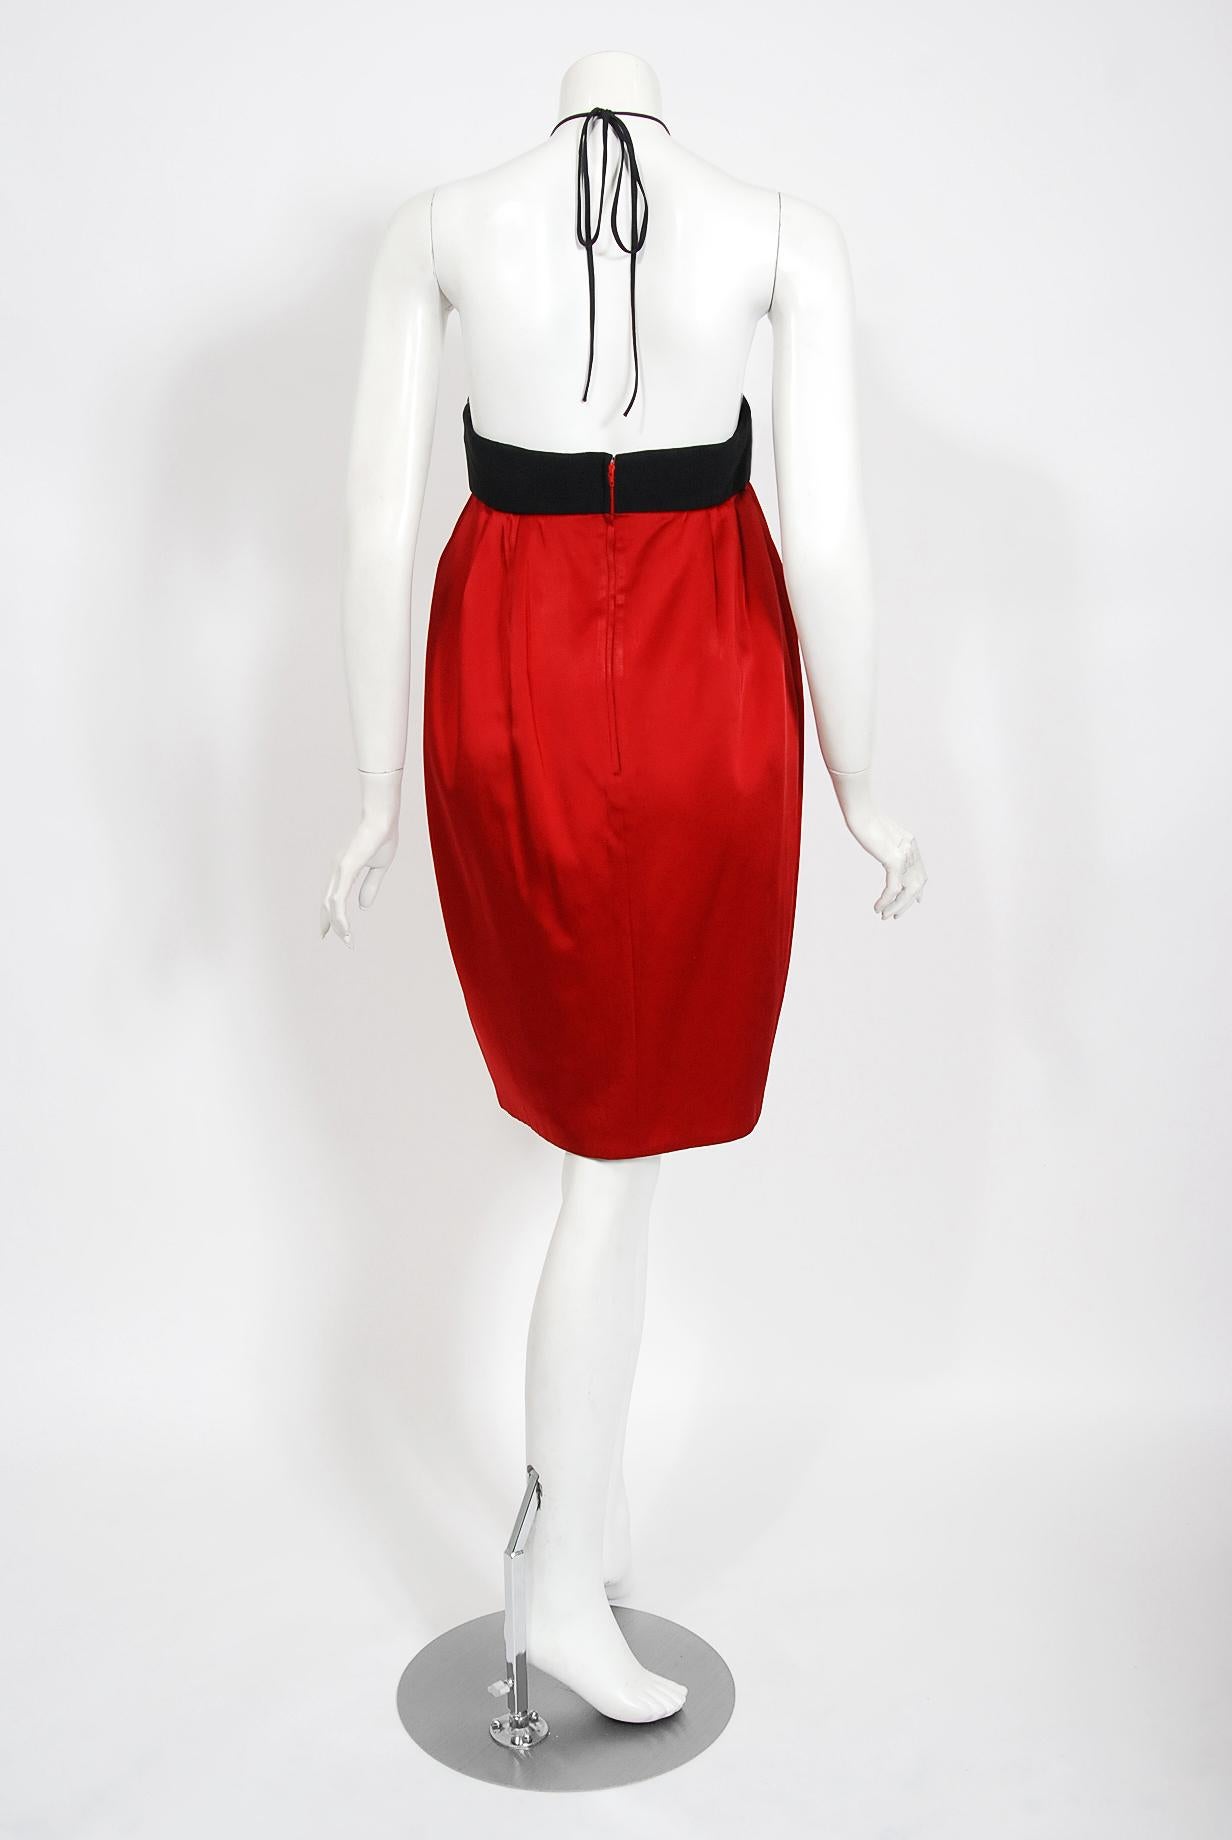 Moschino Couture Robe dos nu « Ladybug » fantaisie vintage en soie noire et rouge, 1995 en vente 6